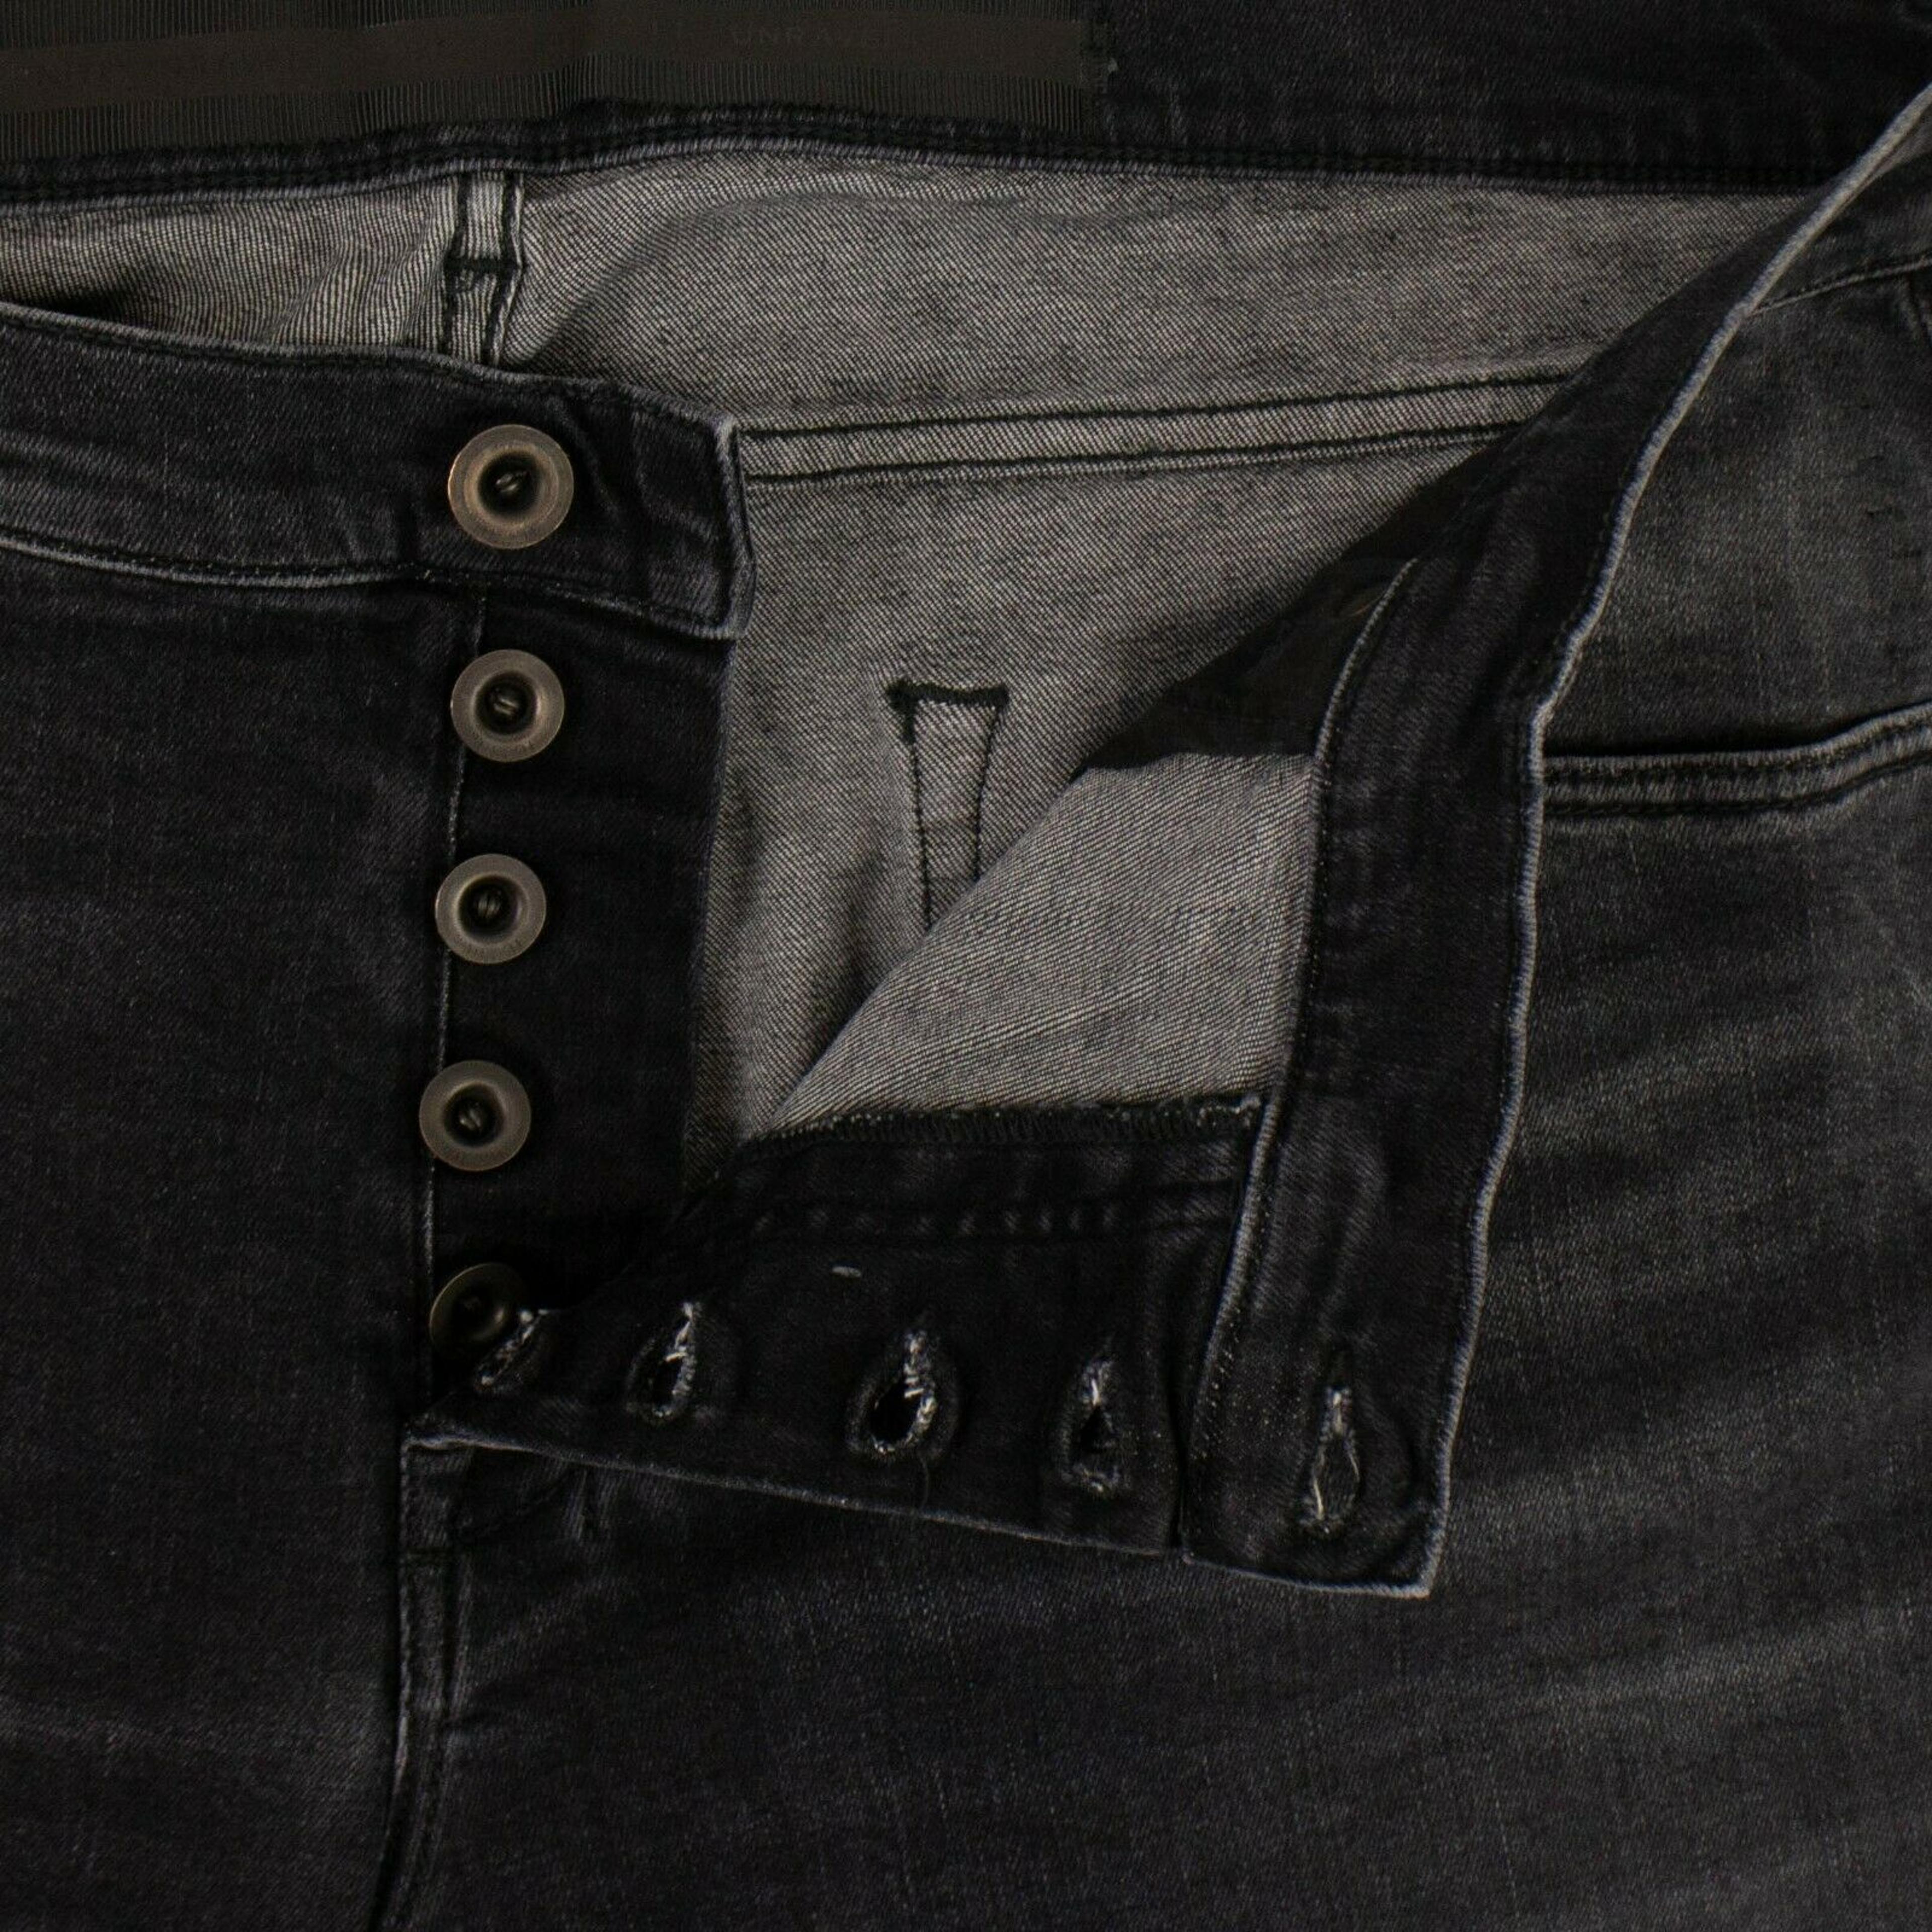 Alternate View 4 of Men's Black Distressed Slim Fit Jeans